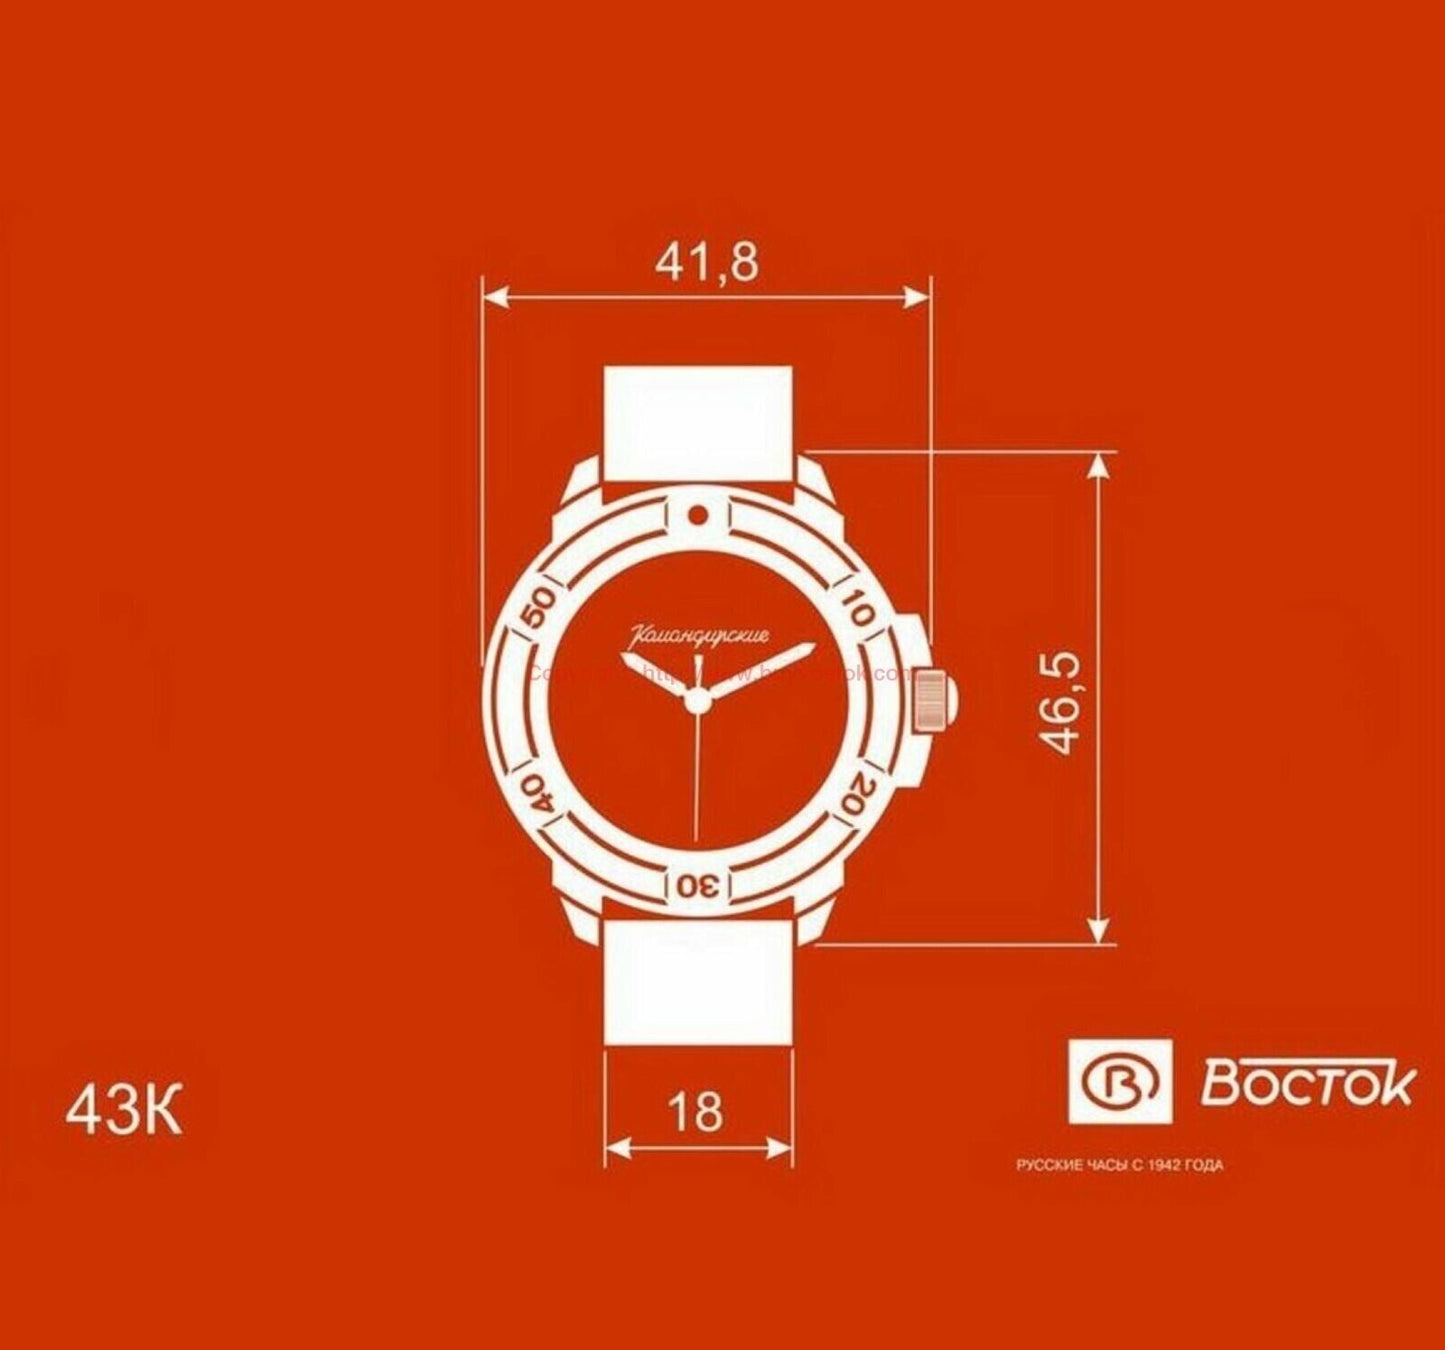 Vostok Komandirskie 43184B Watch